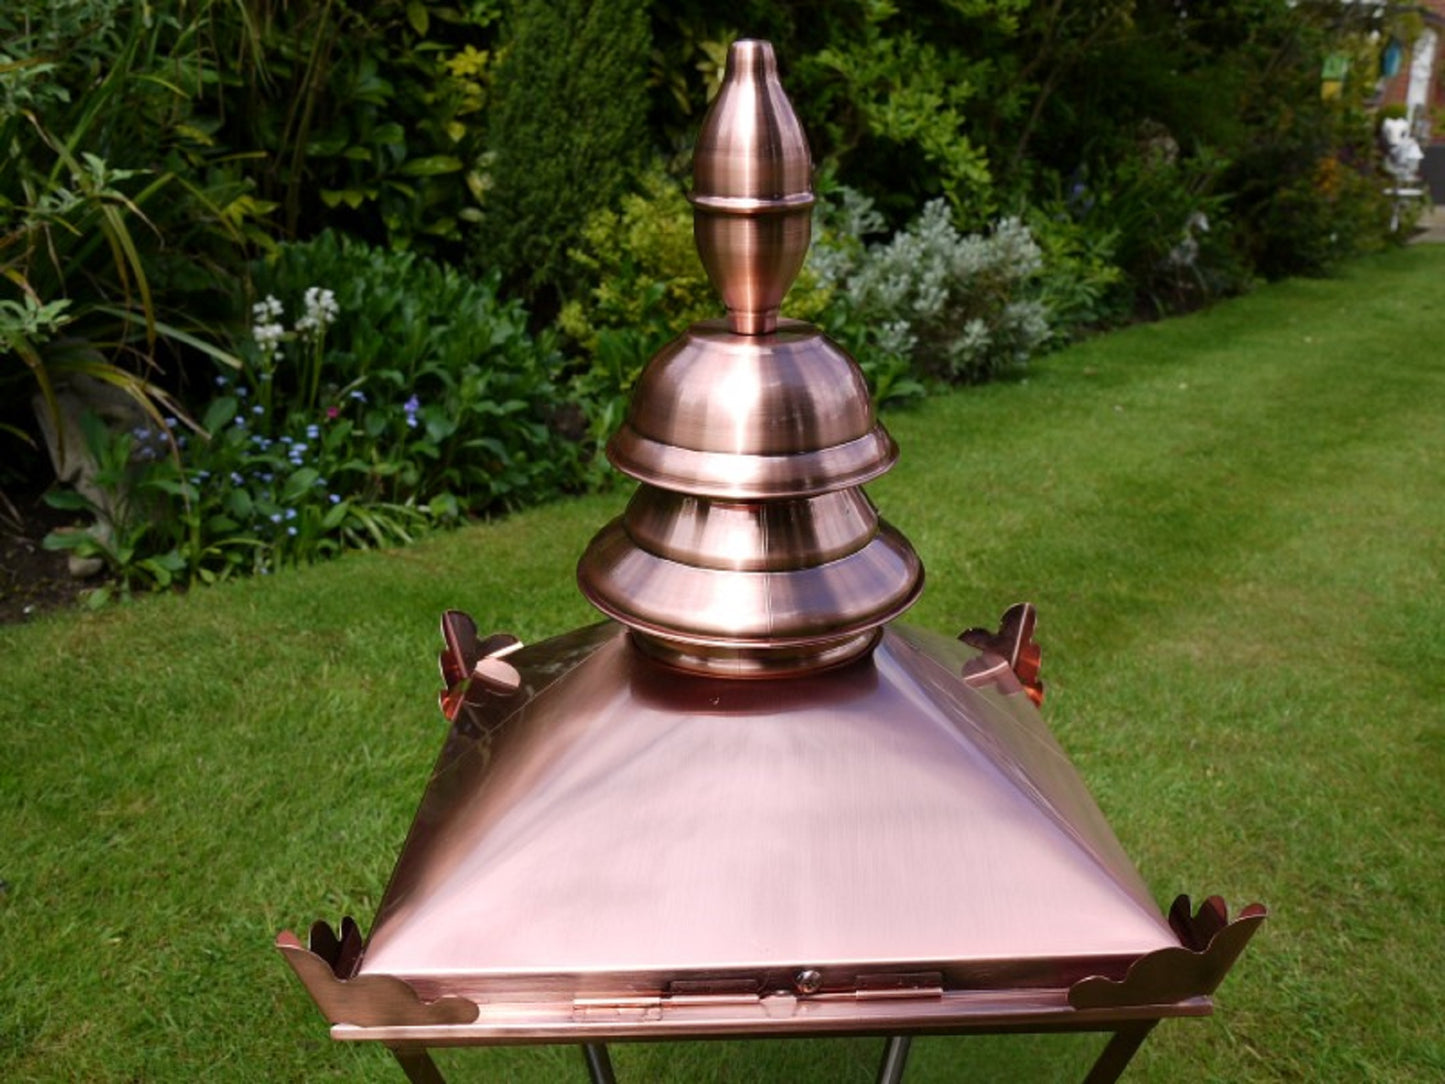 32"x15" Stain Copper Finish Lantern Lamp Top